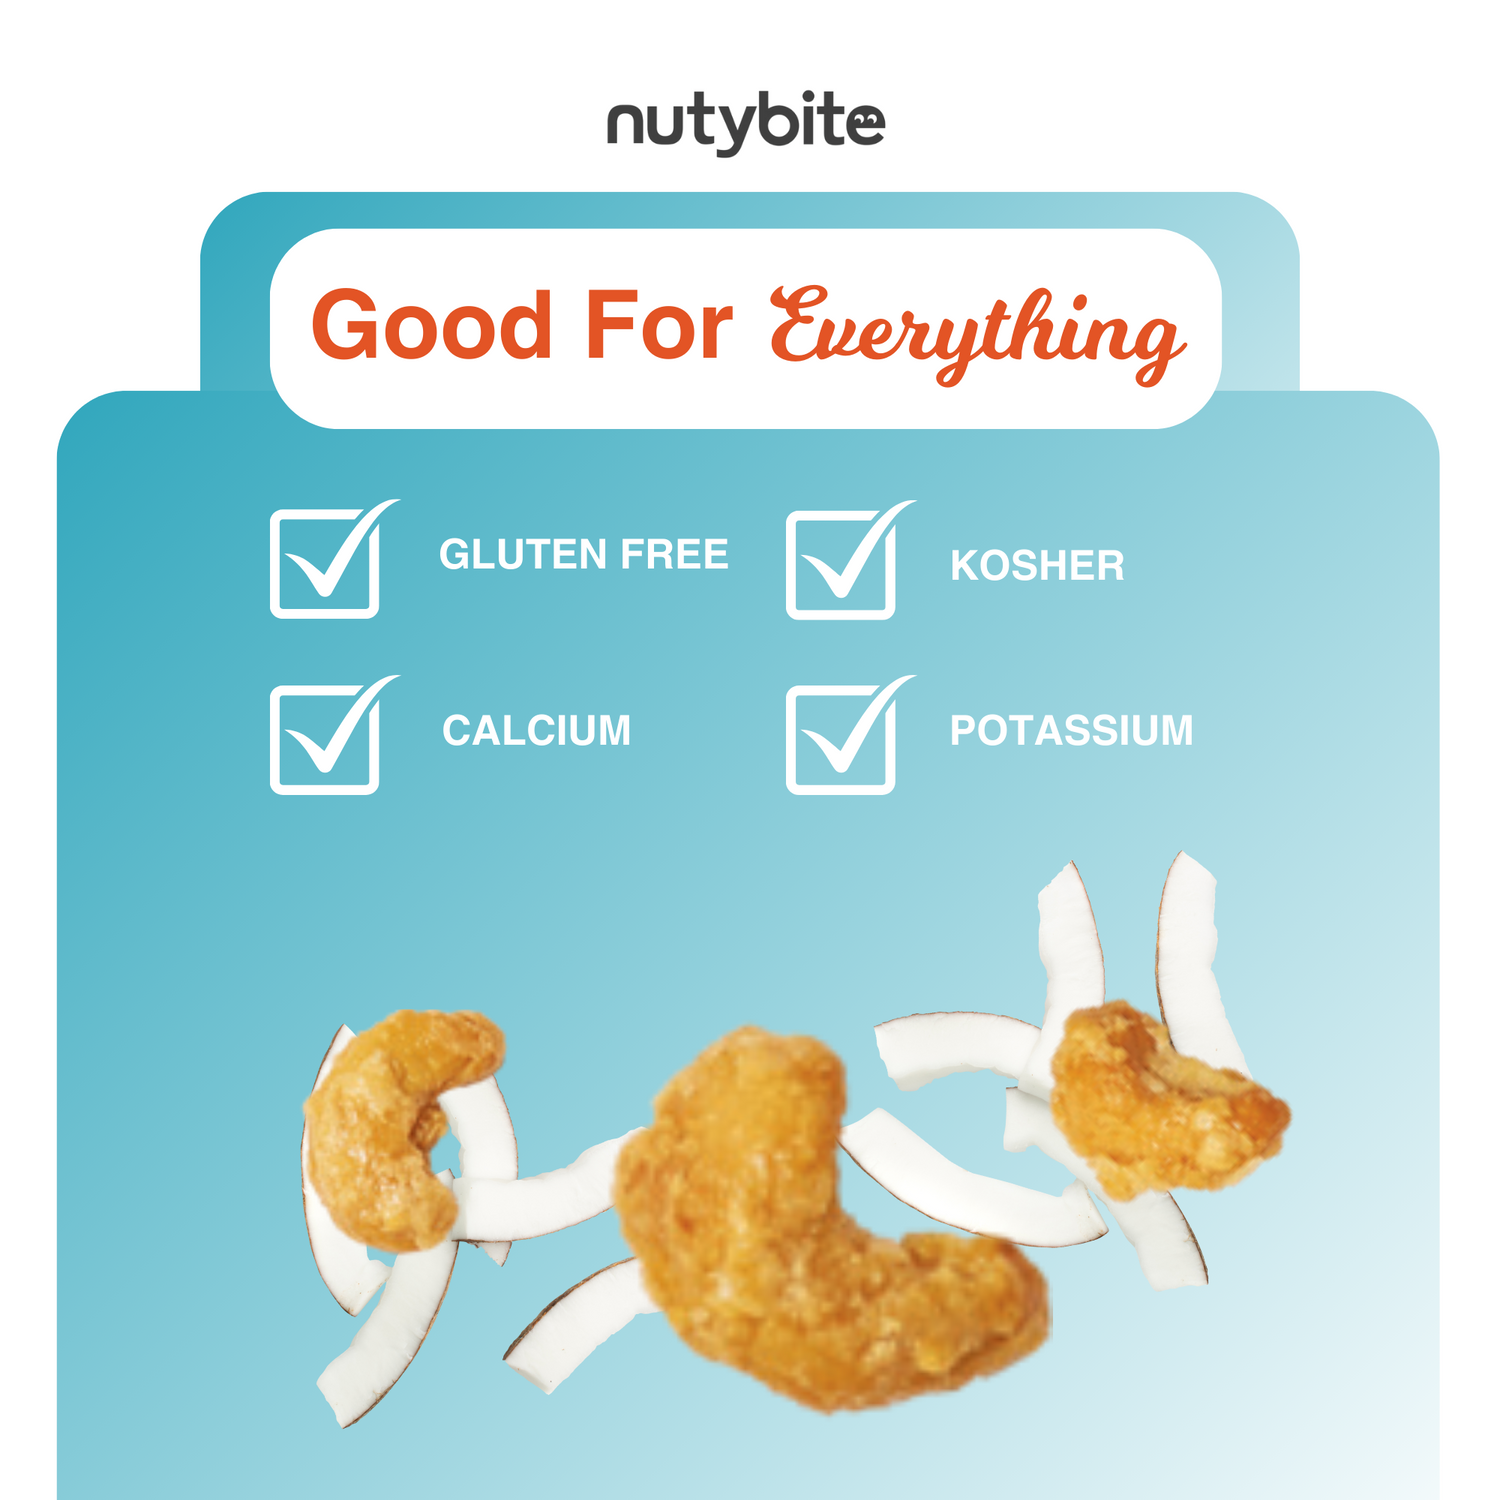 Nutybite Toffee Coconut Cashews information